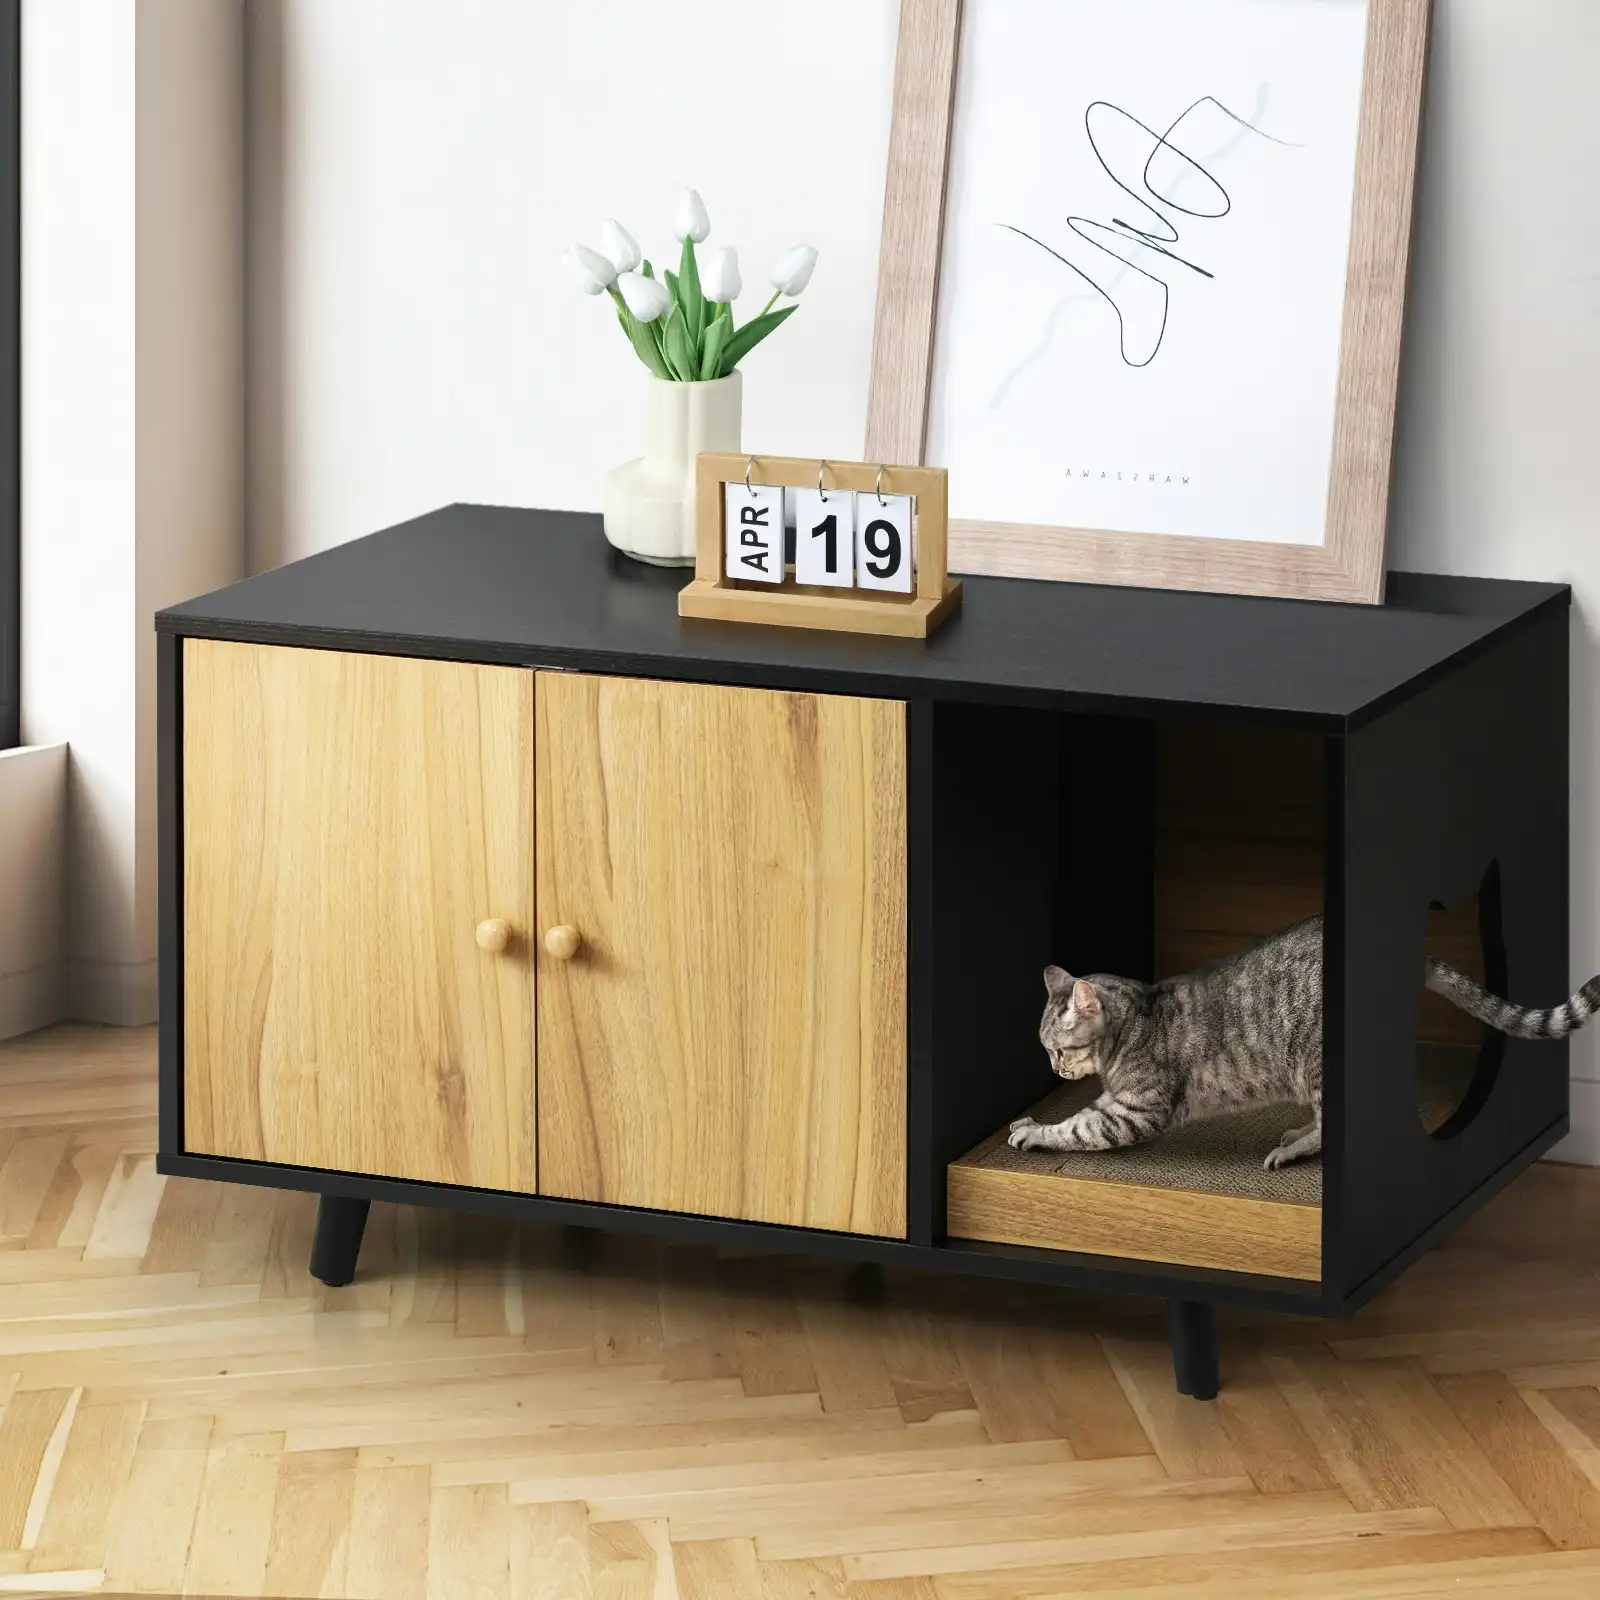 Alopet Cat Litter Box Enclosure Wooden Side Table Storage Cabinet W/ Scratcher